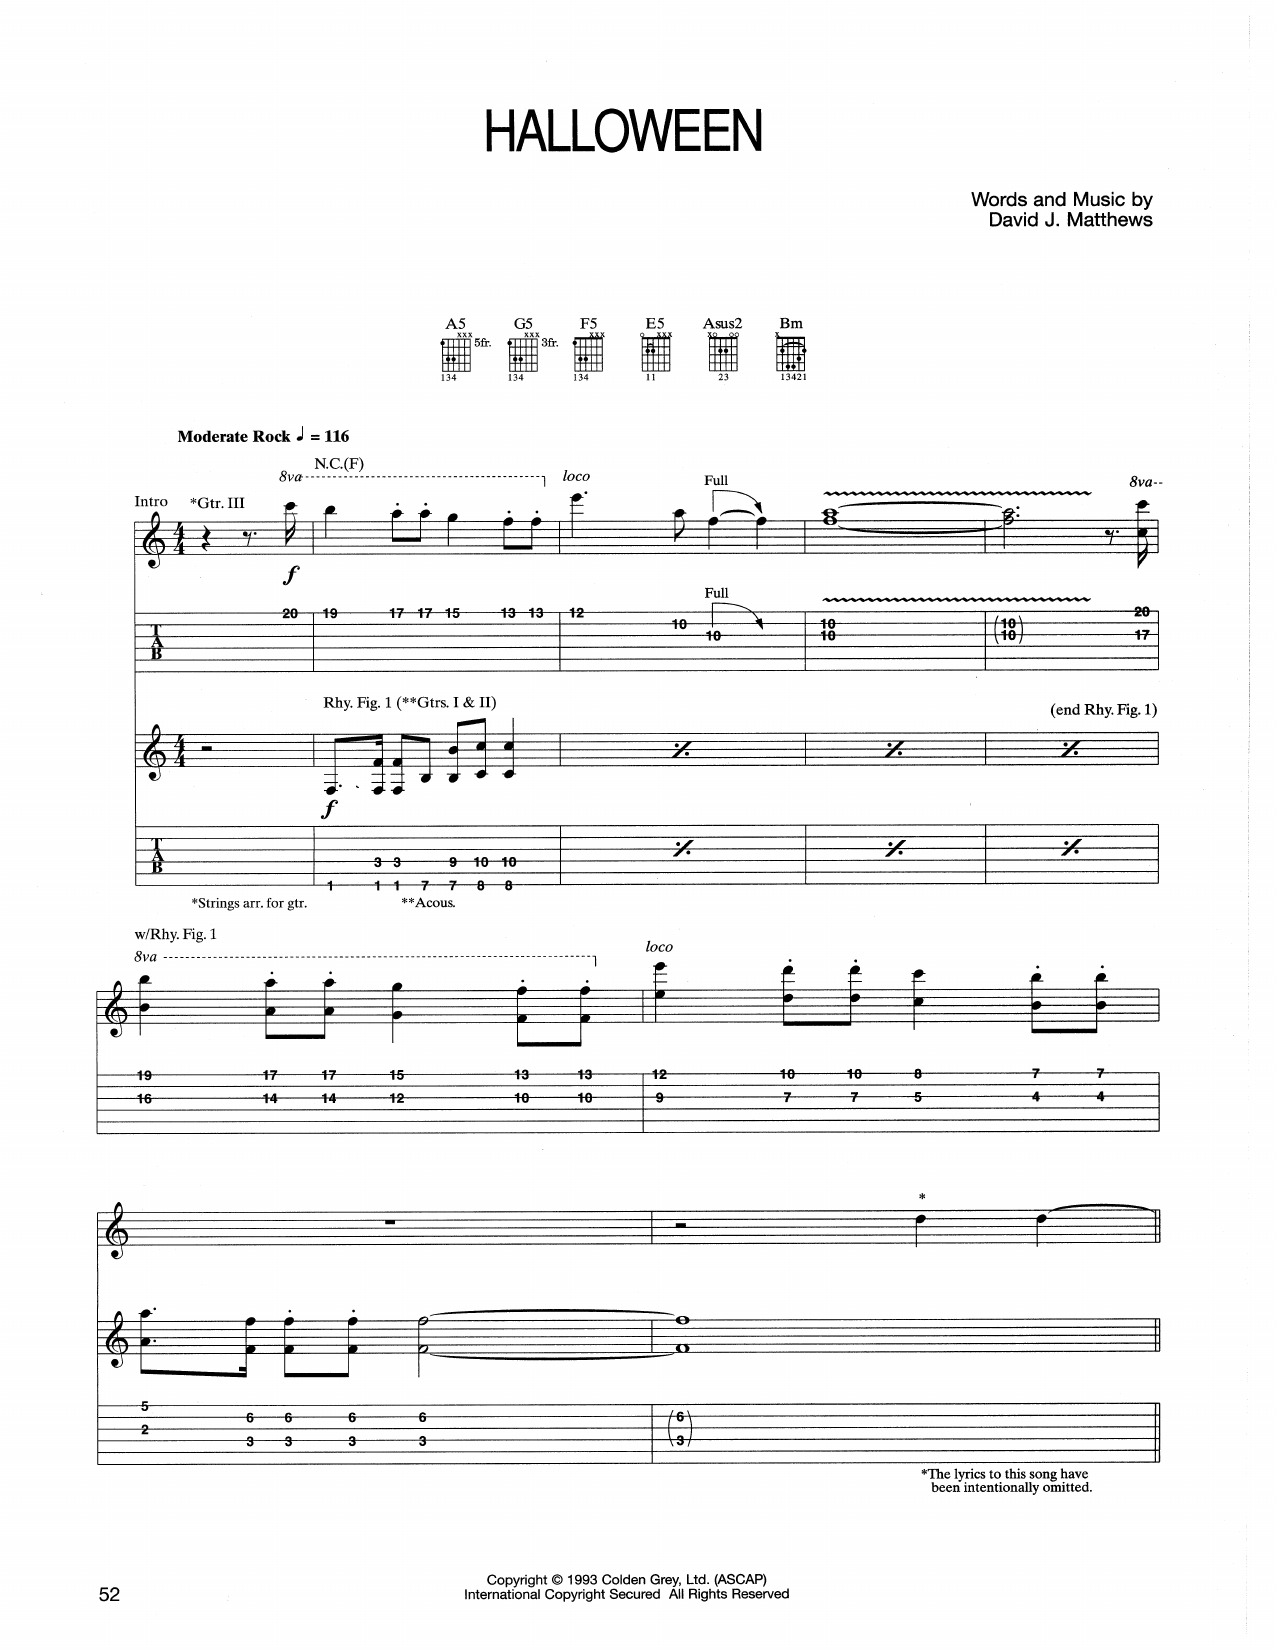 Dave Matthews Band Halloween Sheet Music Notes & Chords for Guitar Tab - Download or Print PDF